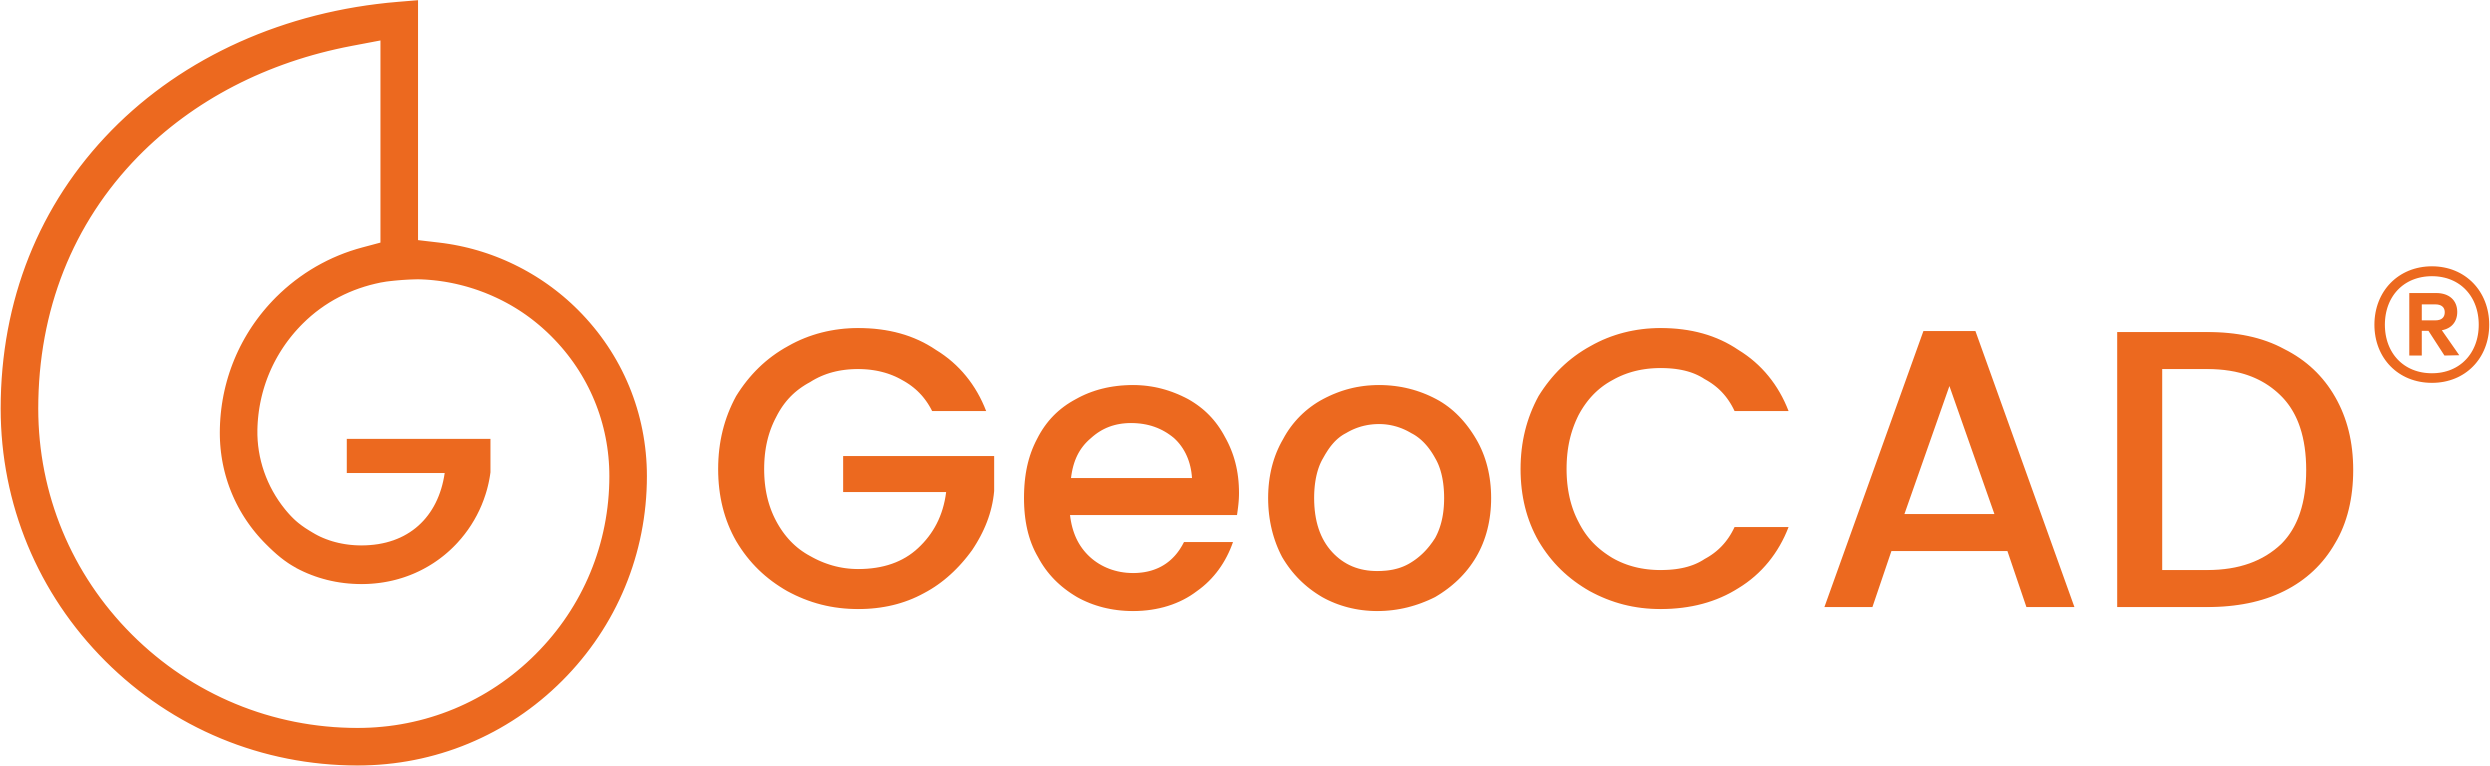 geocad.com.tr